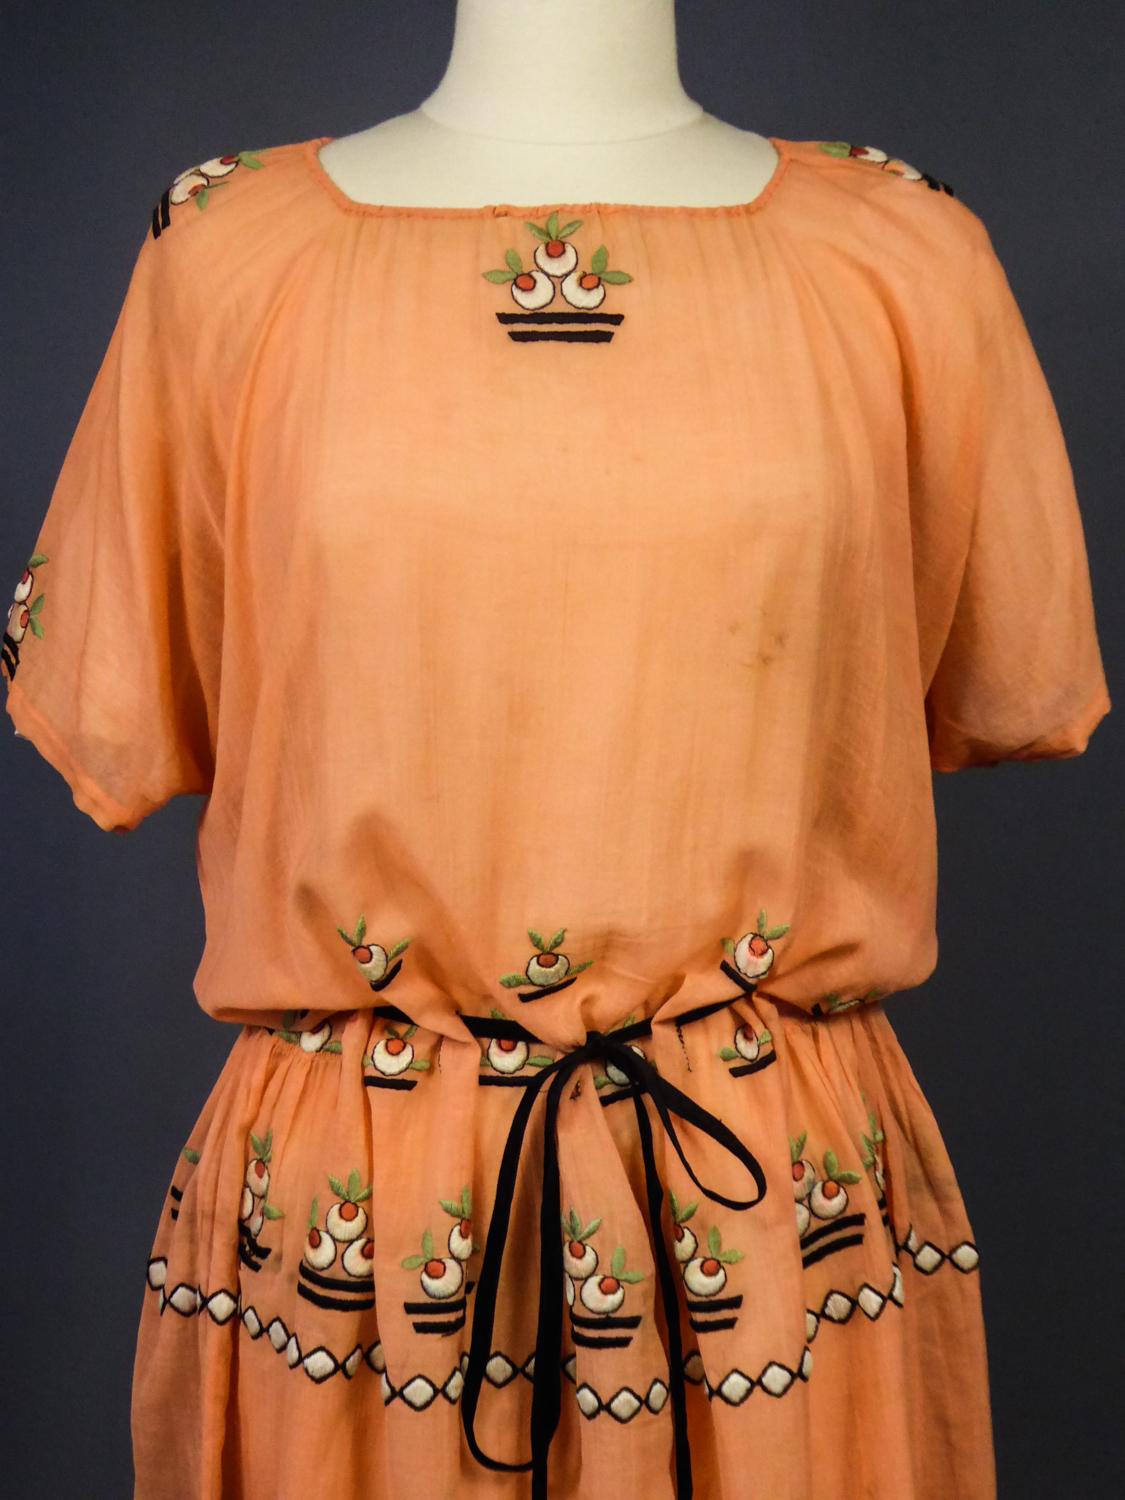 1925 dress styles